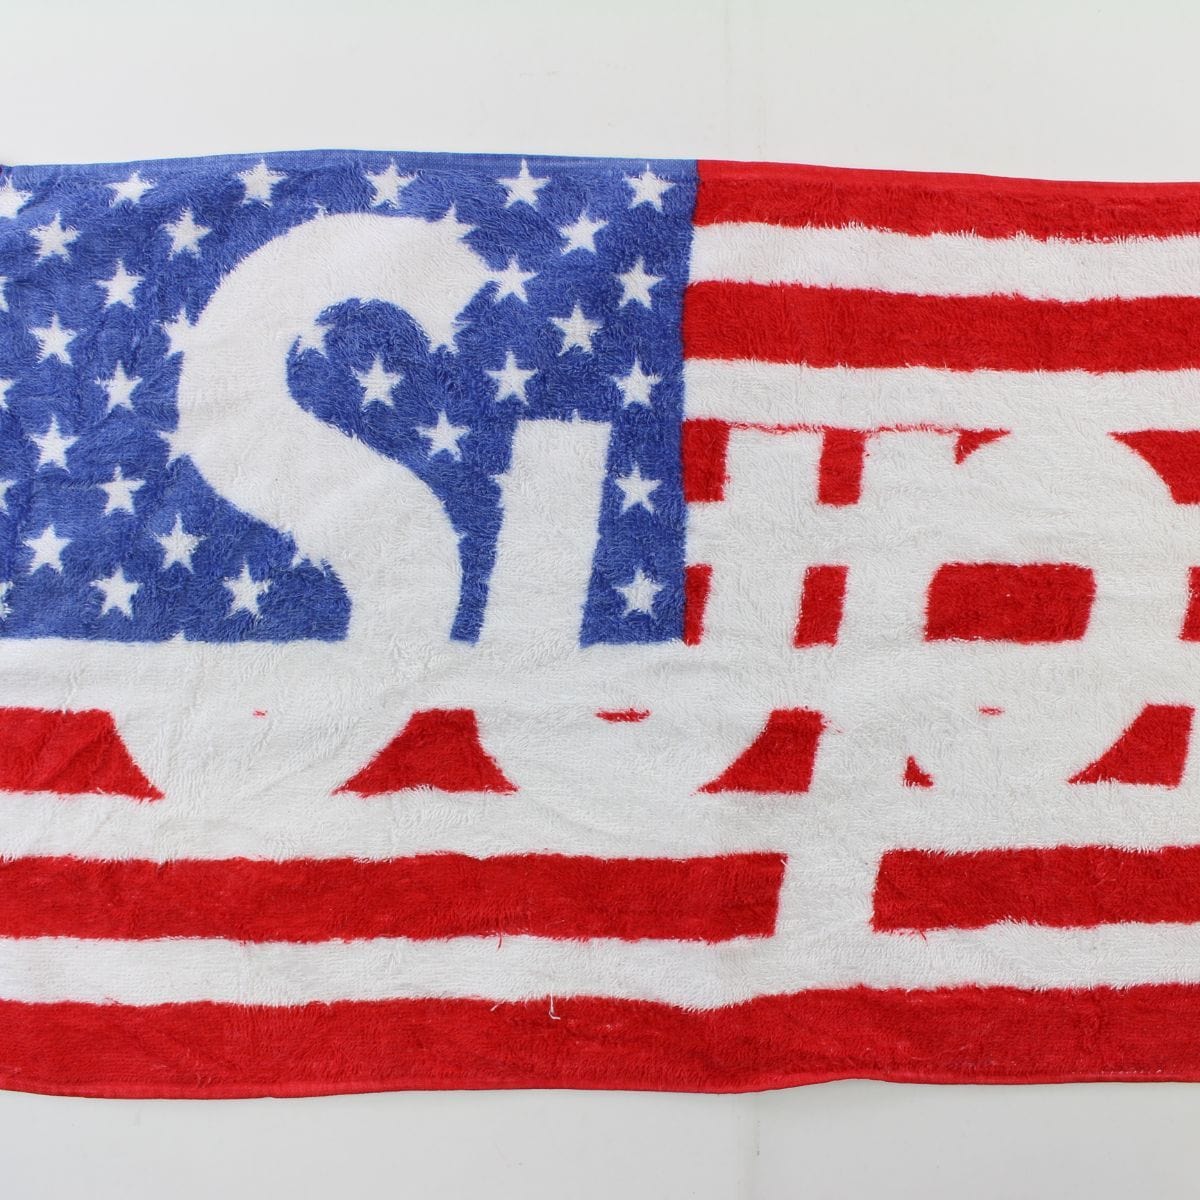 Supreme USA Logo Towel - SaruGeneral